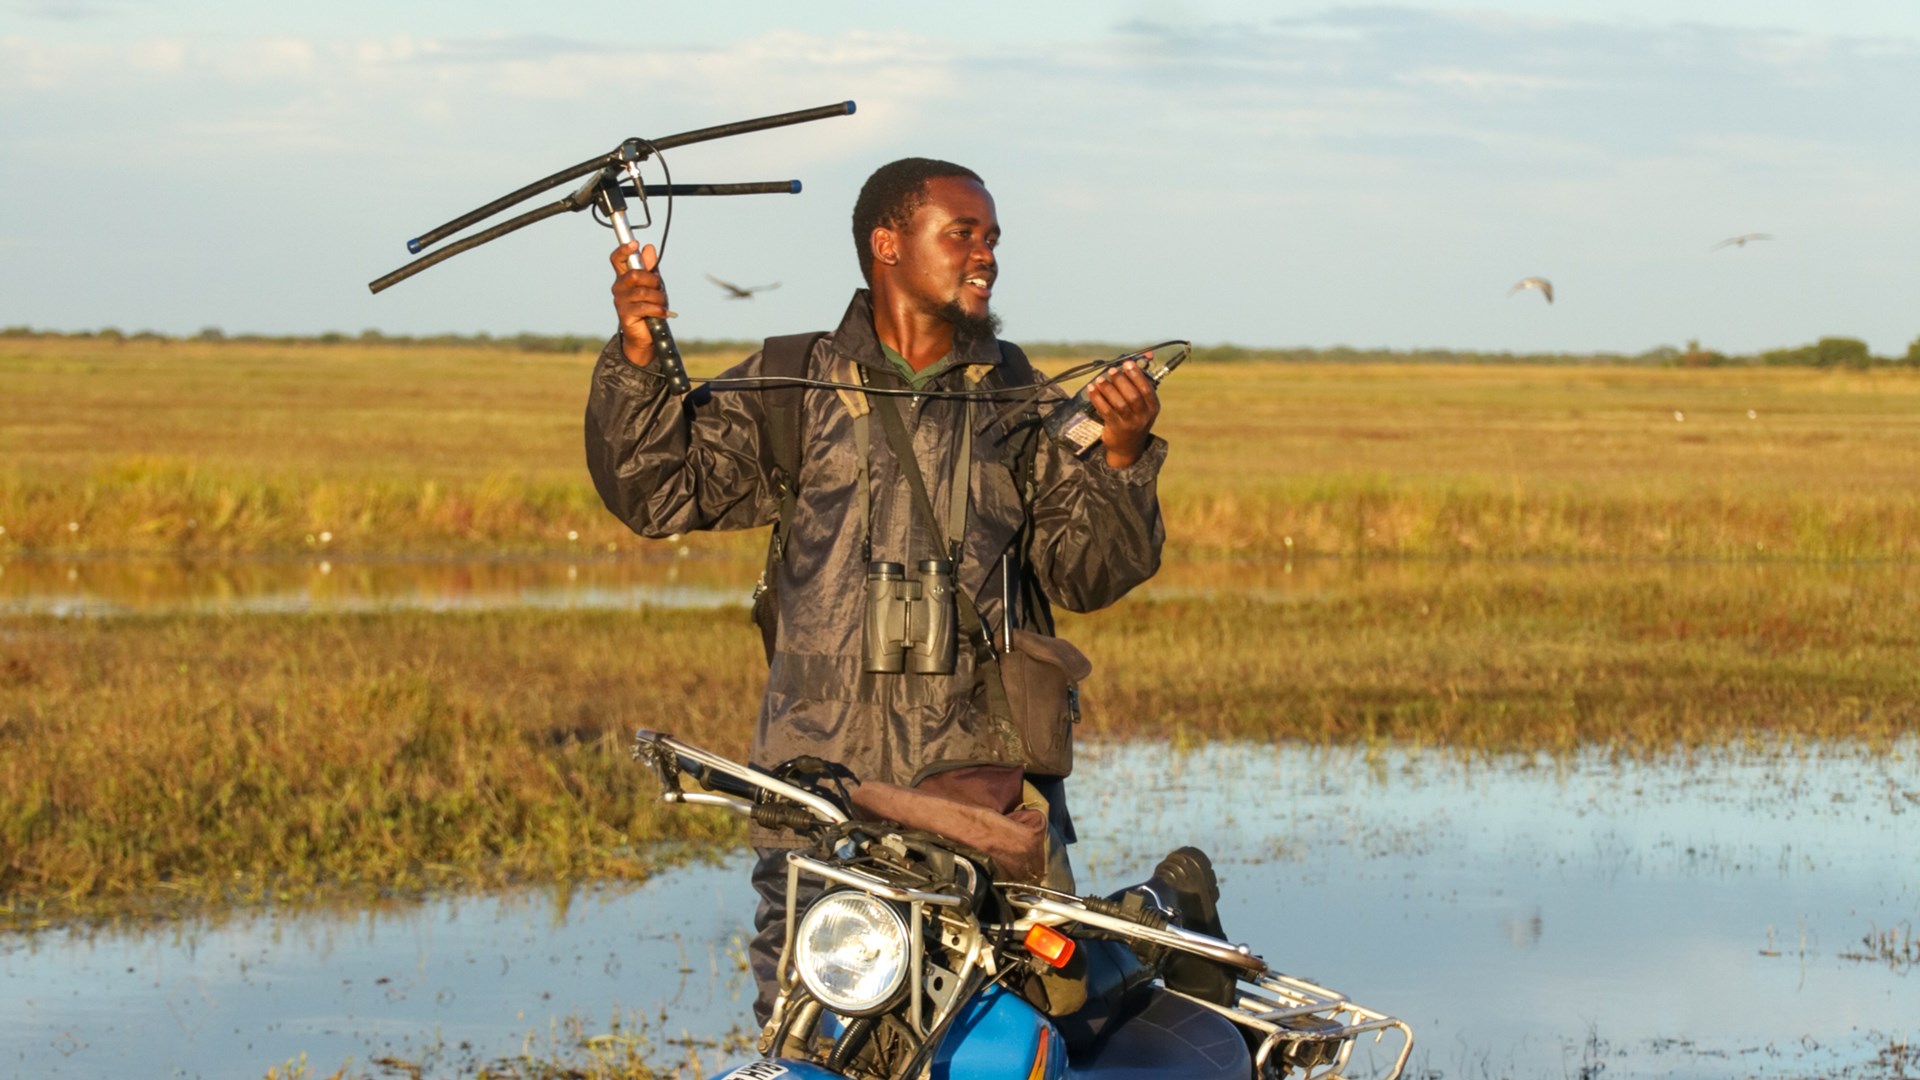 Man on motorbike holding a large antenna.